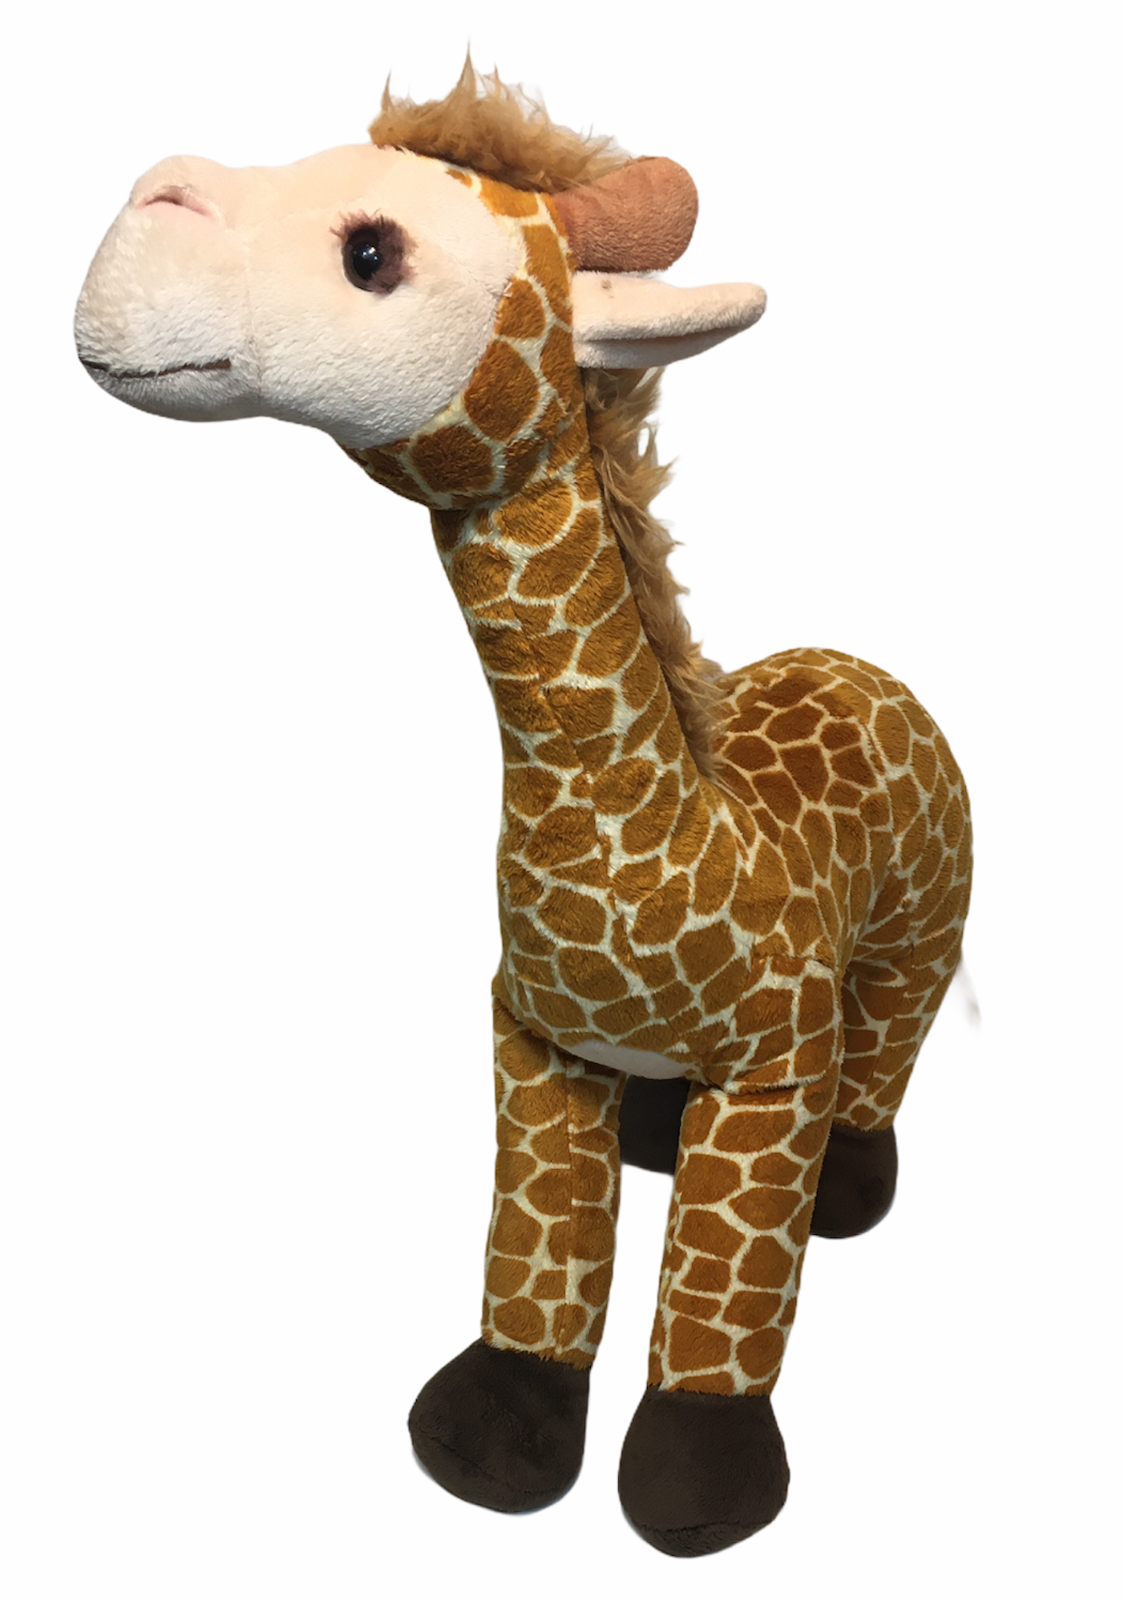 Primary image for Geoffrey Giraffe Toys R Us Plush Jeffrey 21" Stuffed Animal - DISCONTINUED 2010 